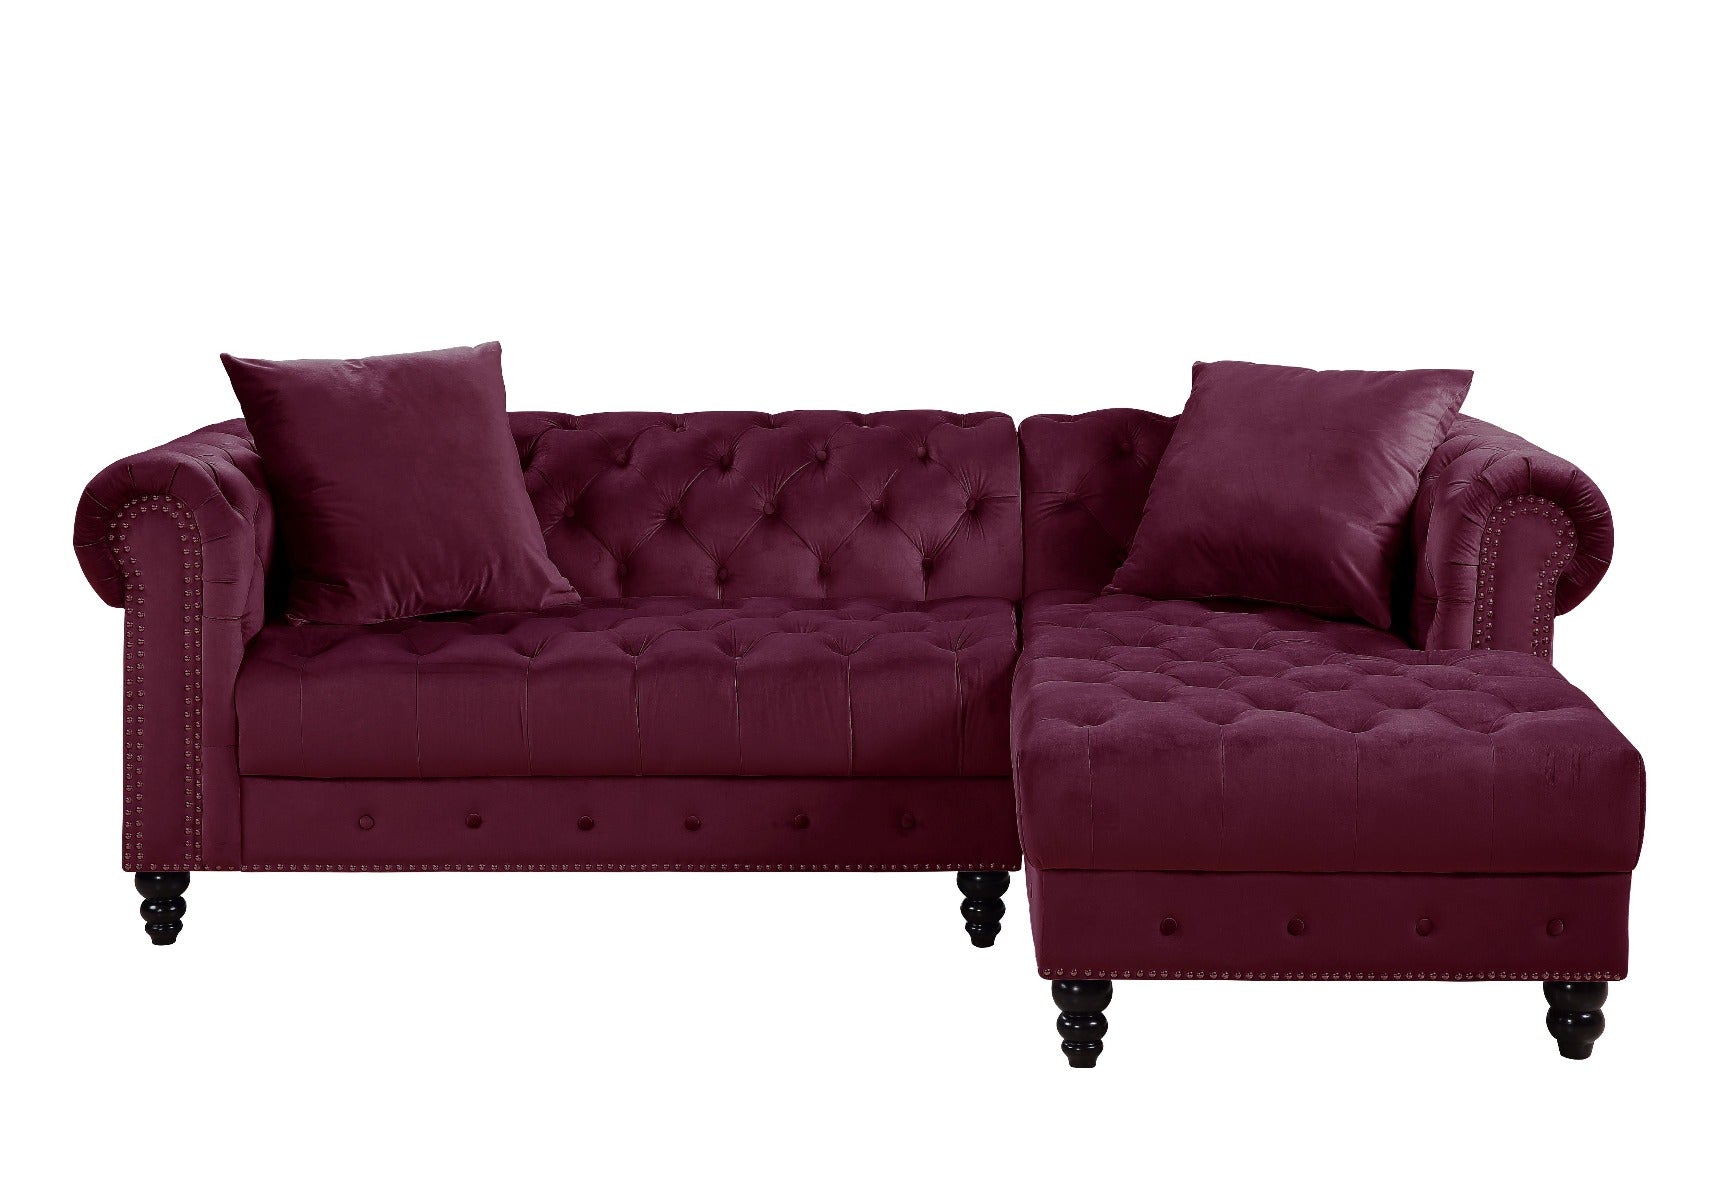 ACME Furniture Sofas & Couches - ACME Adnelis Sectional Sofa w/2 Pillows, Red Velvet